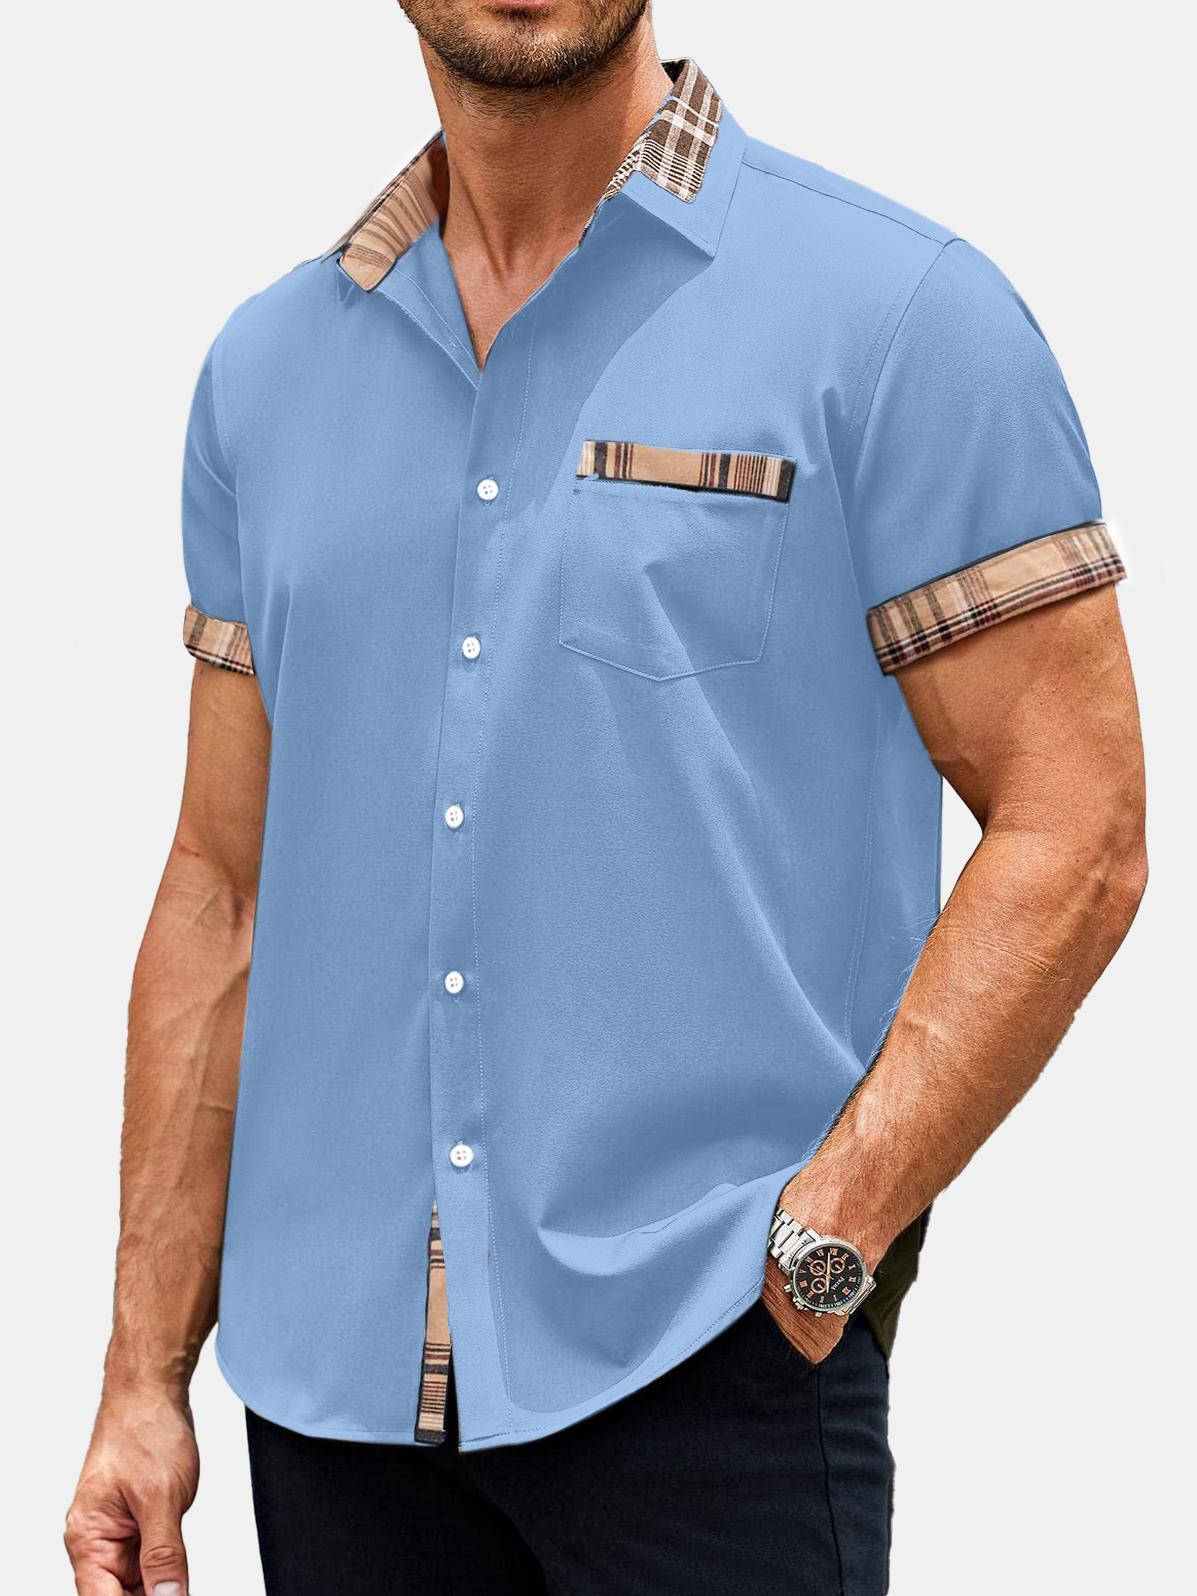 Men's Casual Fashion Checkered Contrast Short Sleeve Shirt